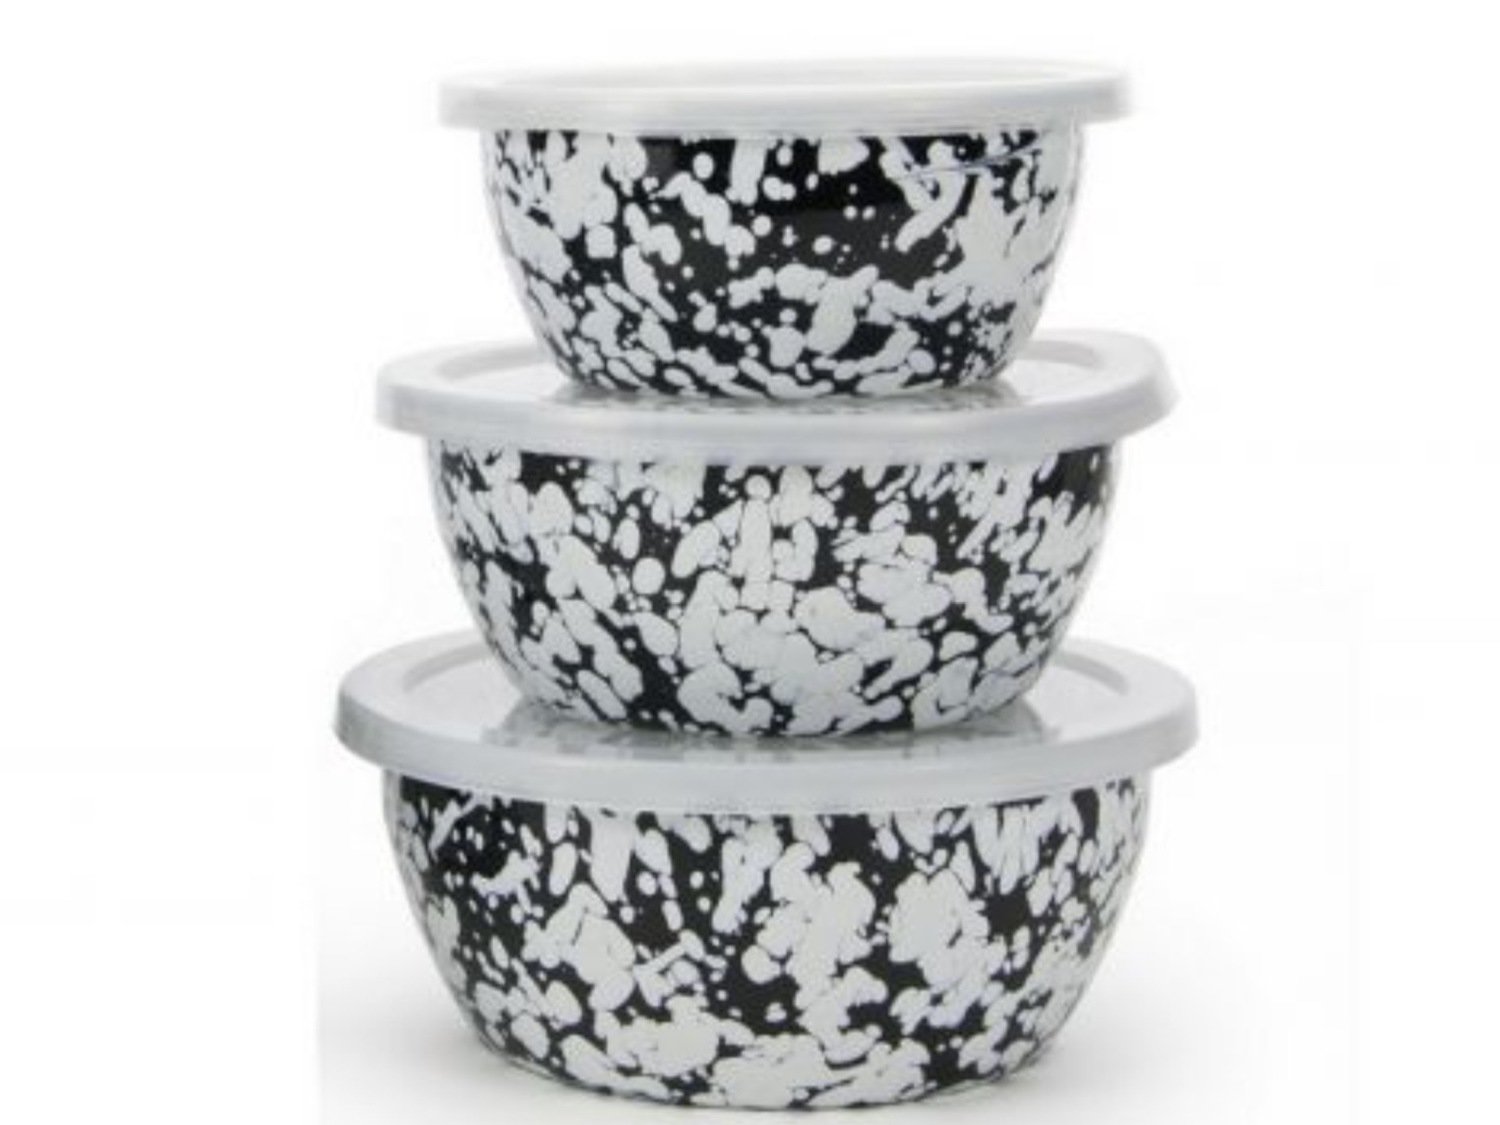 WM black swirl smalll nesting bowls (3 bowls with lids)